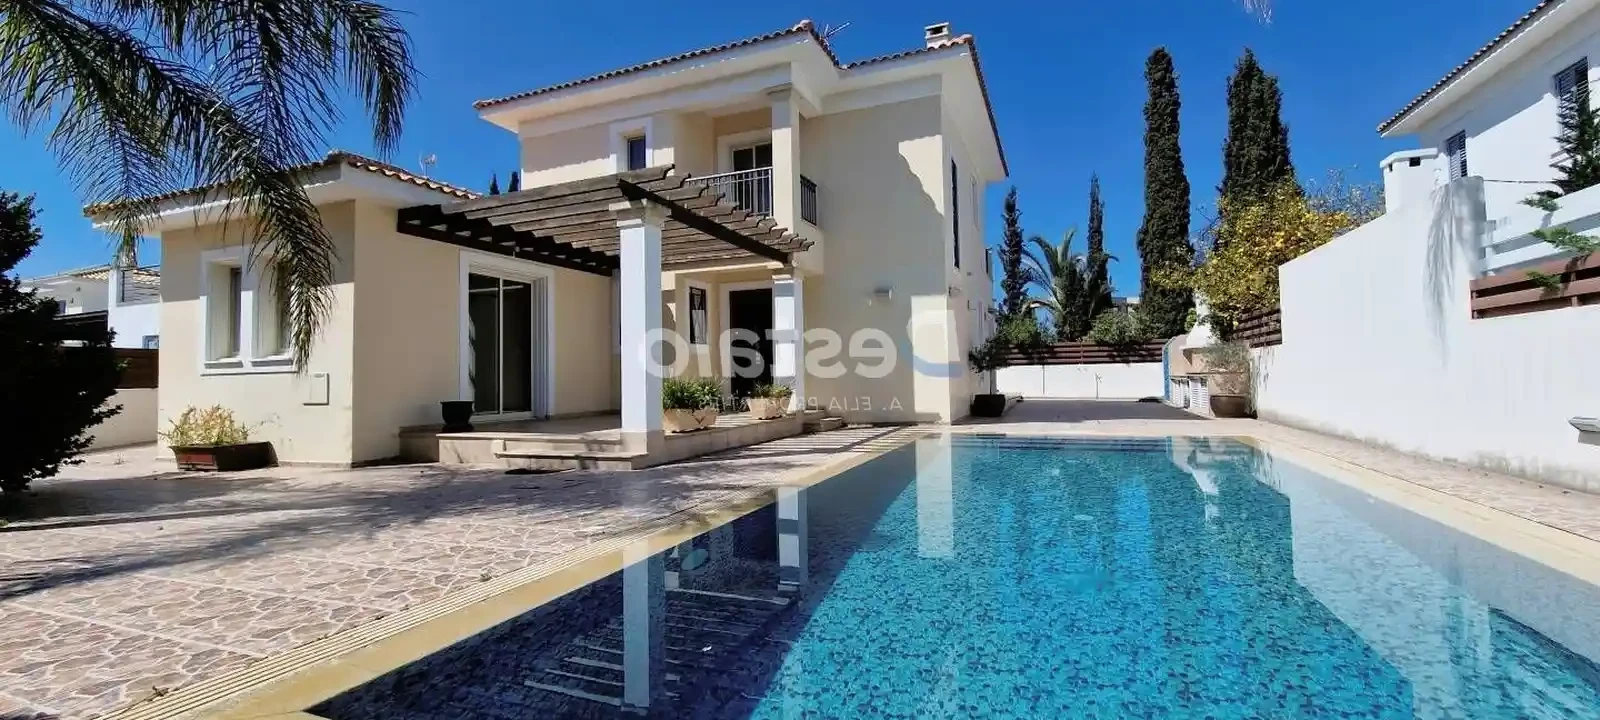 3-bedroom villa fоr sаle €740.000, image 1